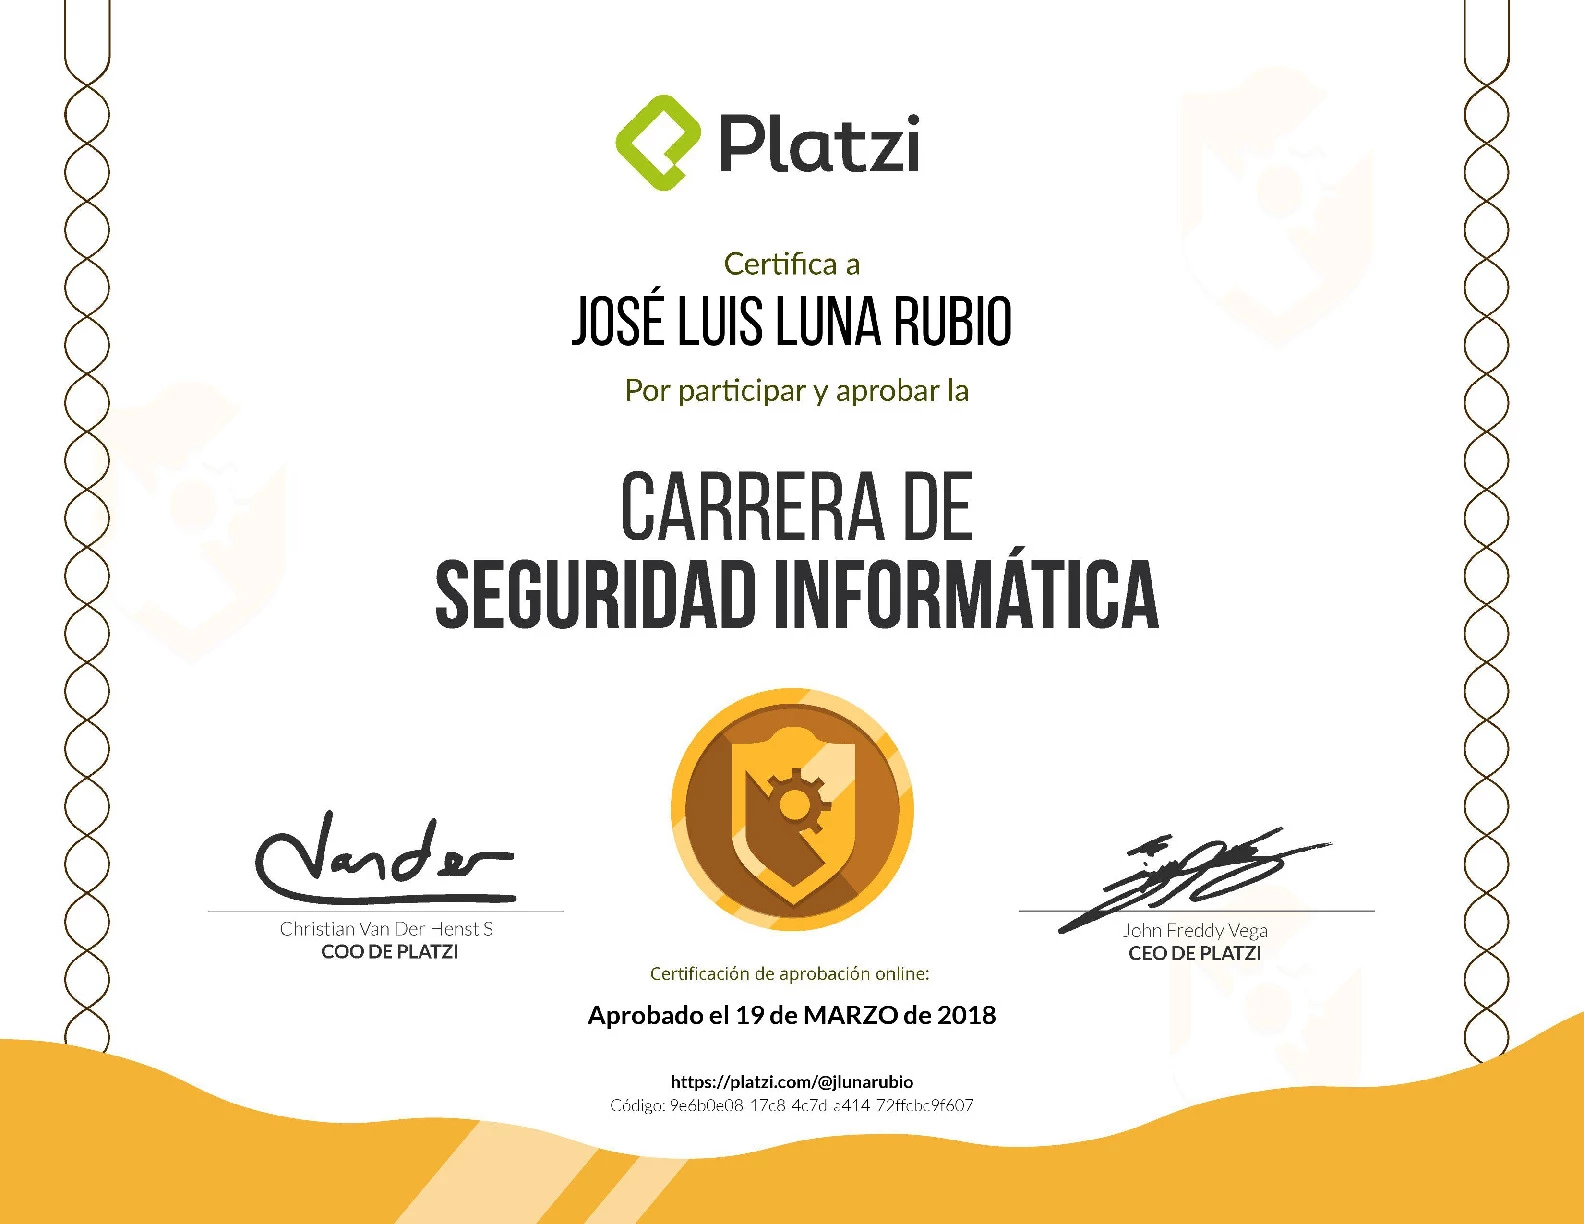 Carrera Platzi Jose Luis Luna Rubio - Seguridad Informatica